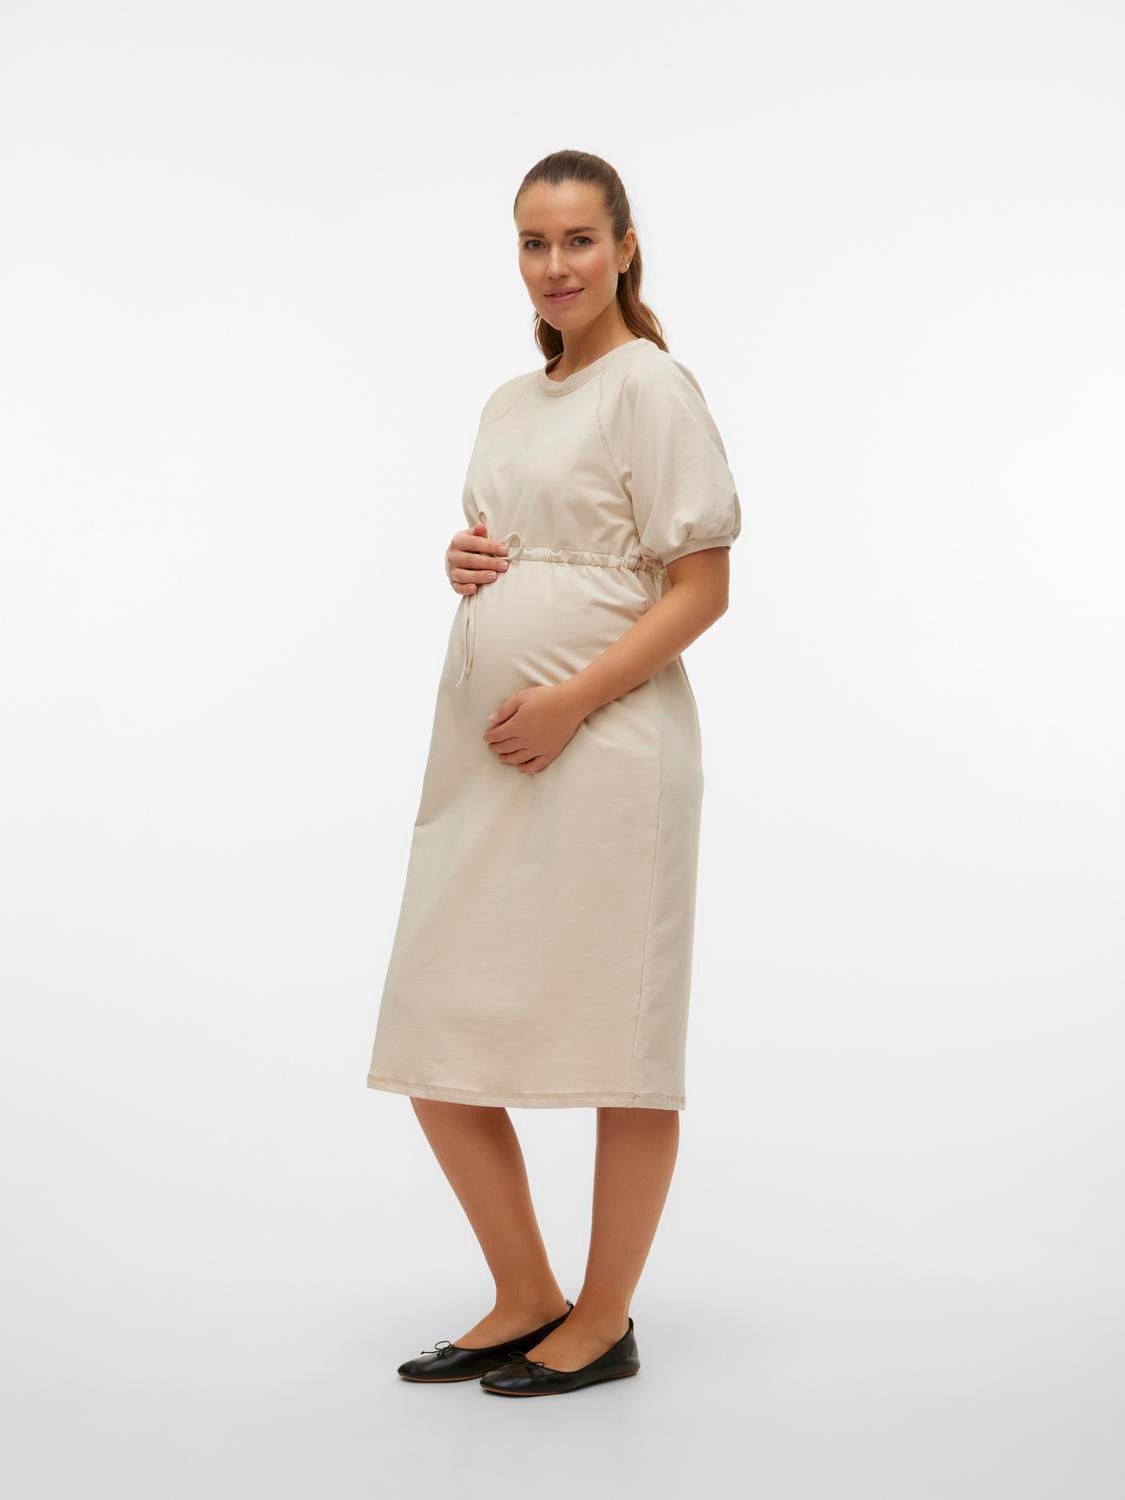 Plus Size Maternity Dress – Mommylicious